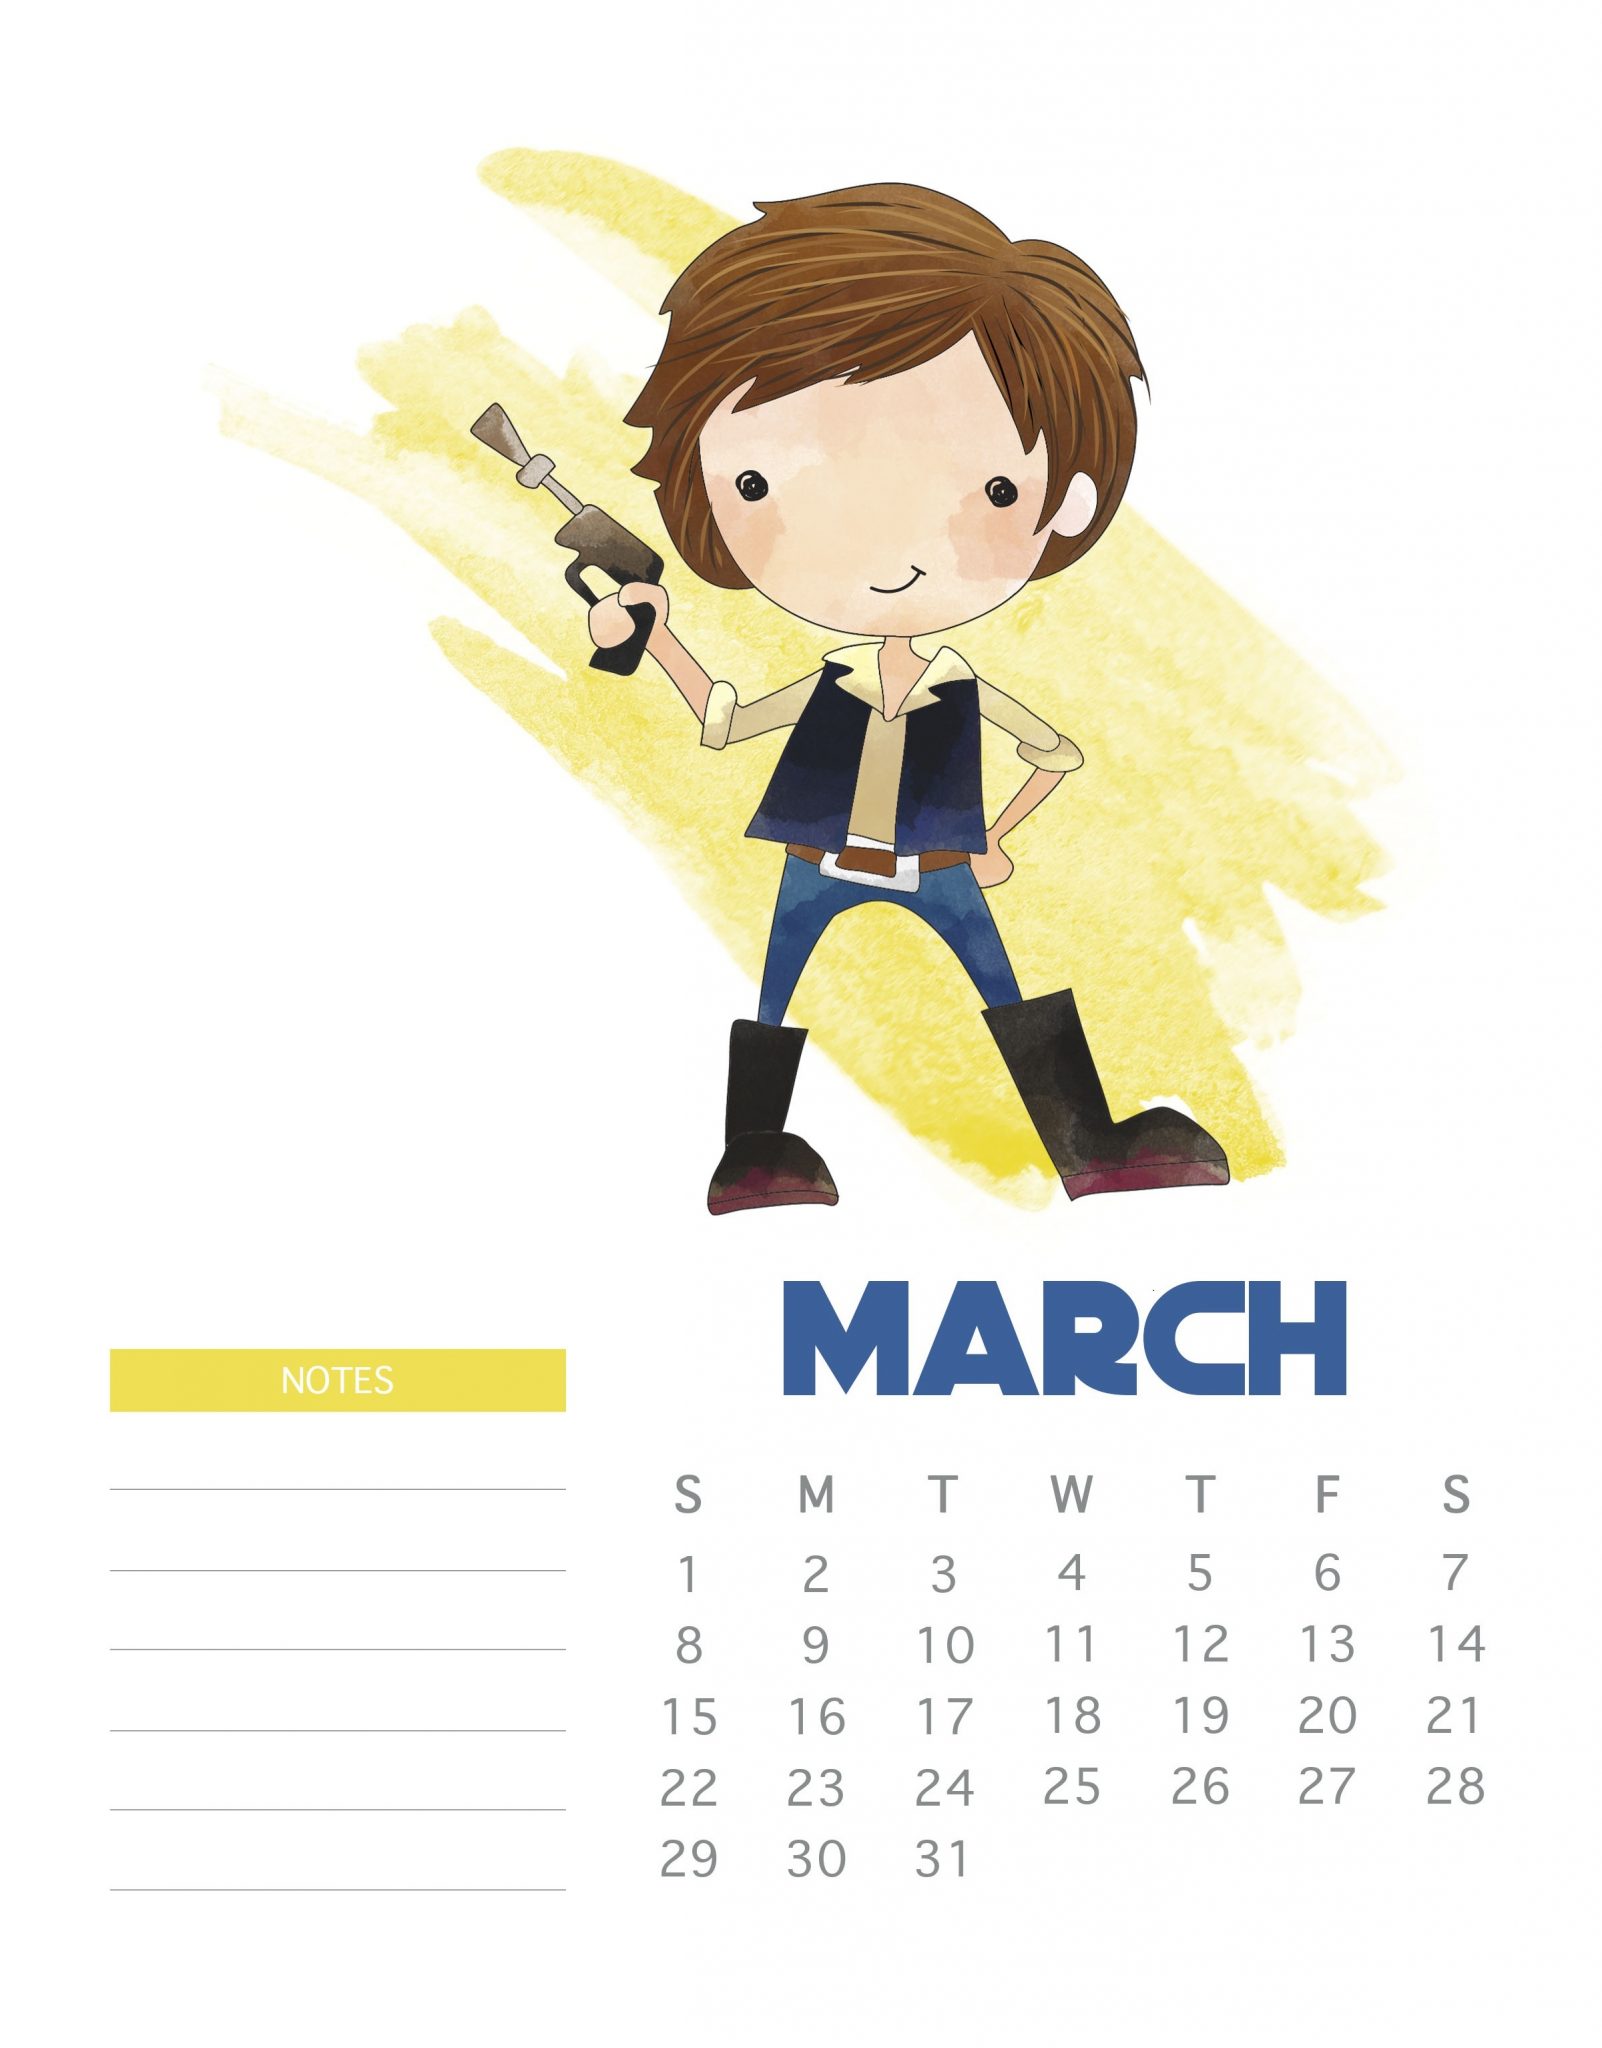 Star Wars March 2020 Calendar